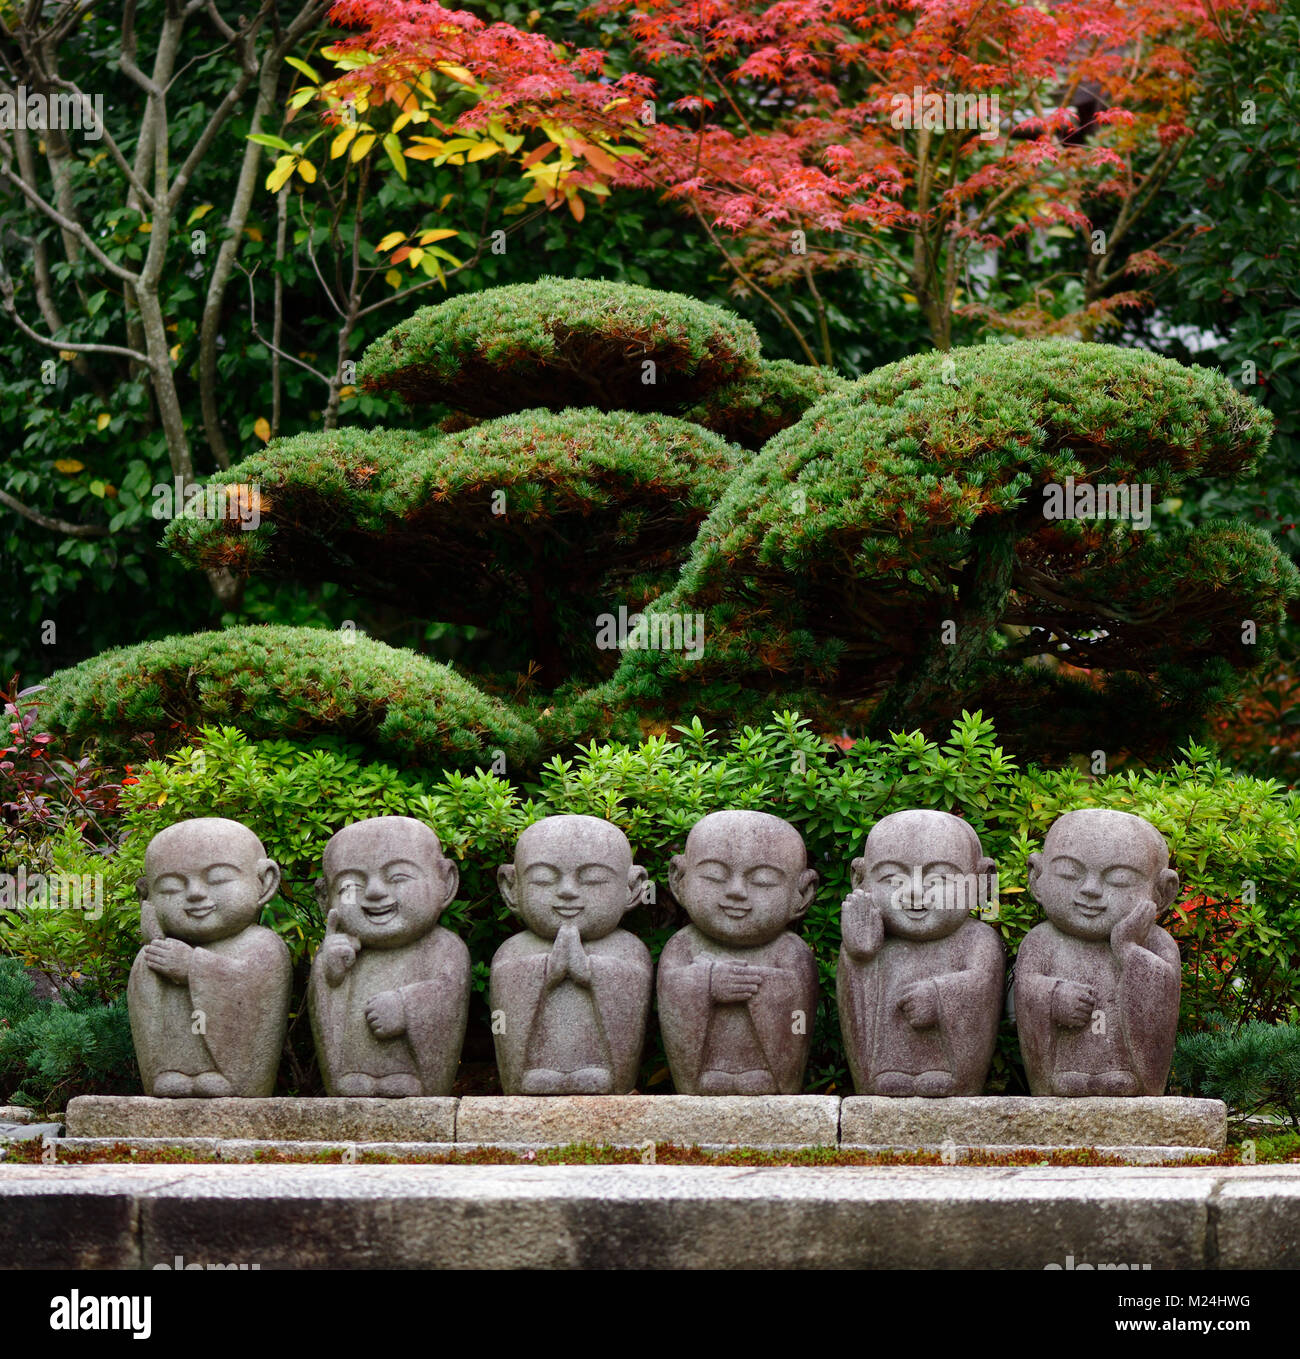 Six cute little monks, Buddhas, stone statues, kawaii garden decor in Kyoto, Japan Stock Photo